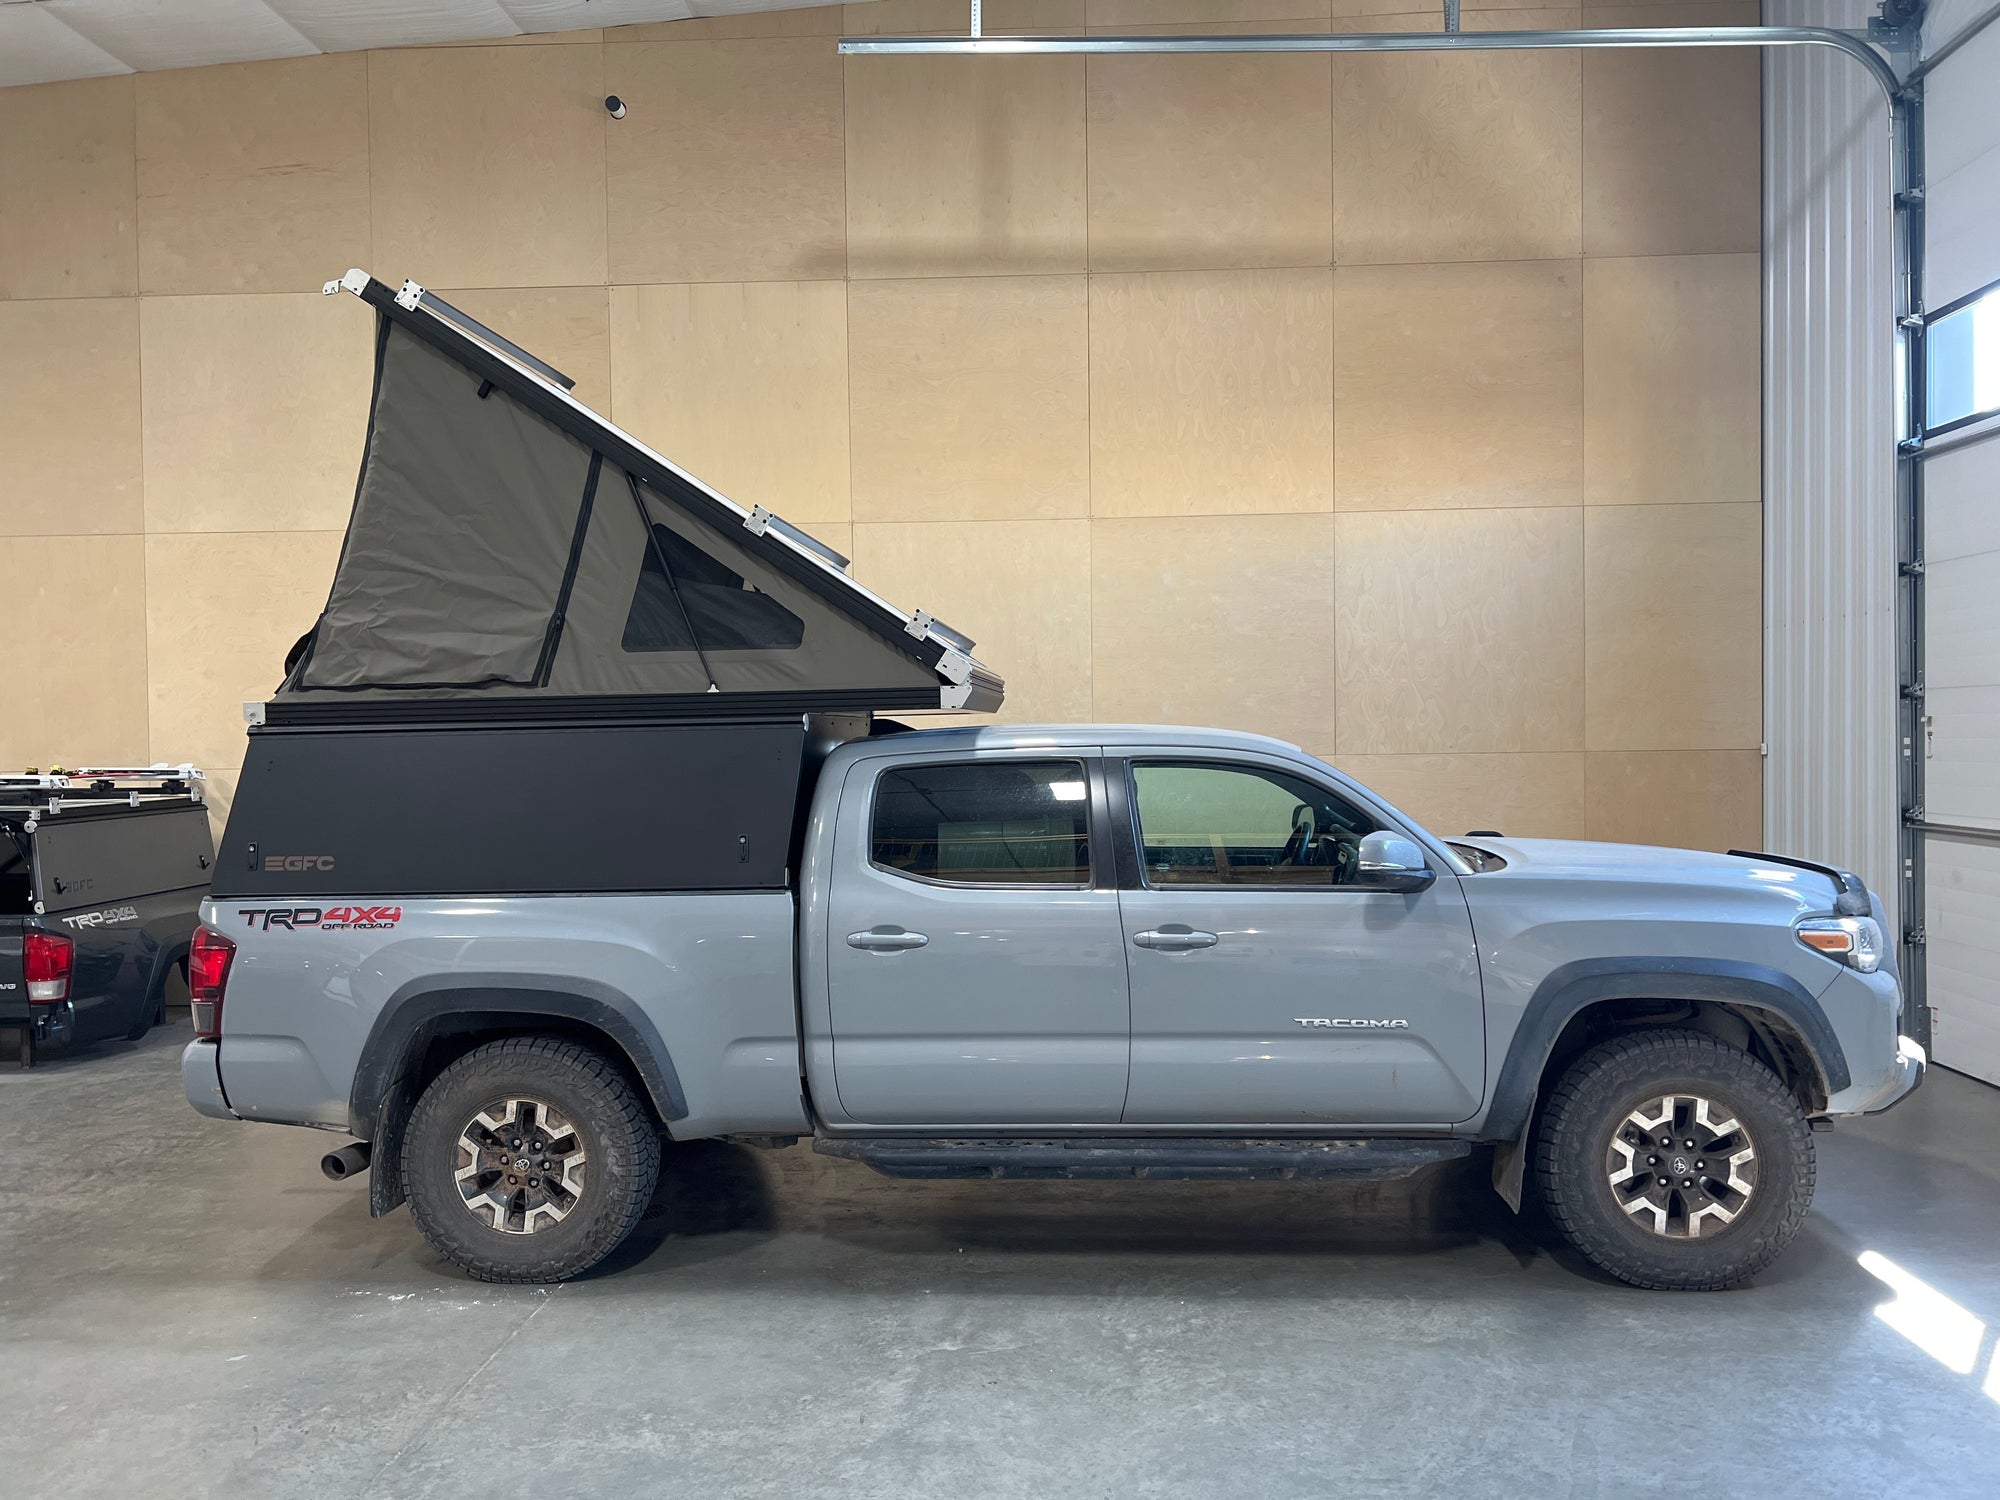 2021 Toyota Tacoma Camper - Build #5272